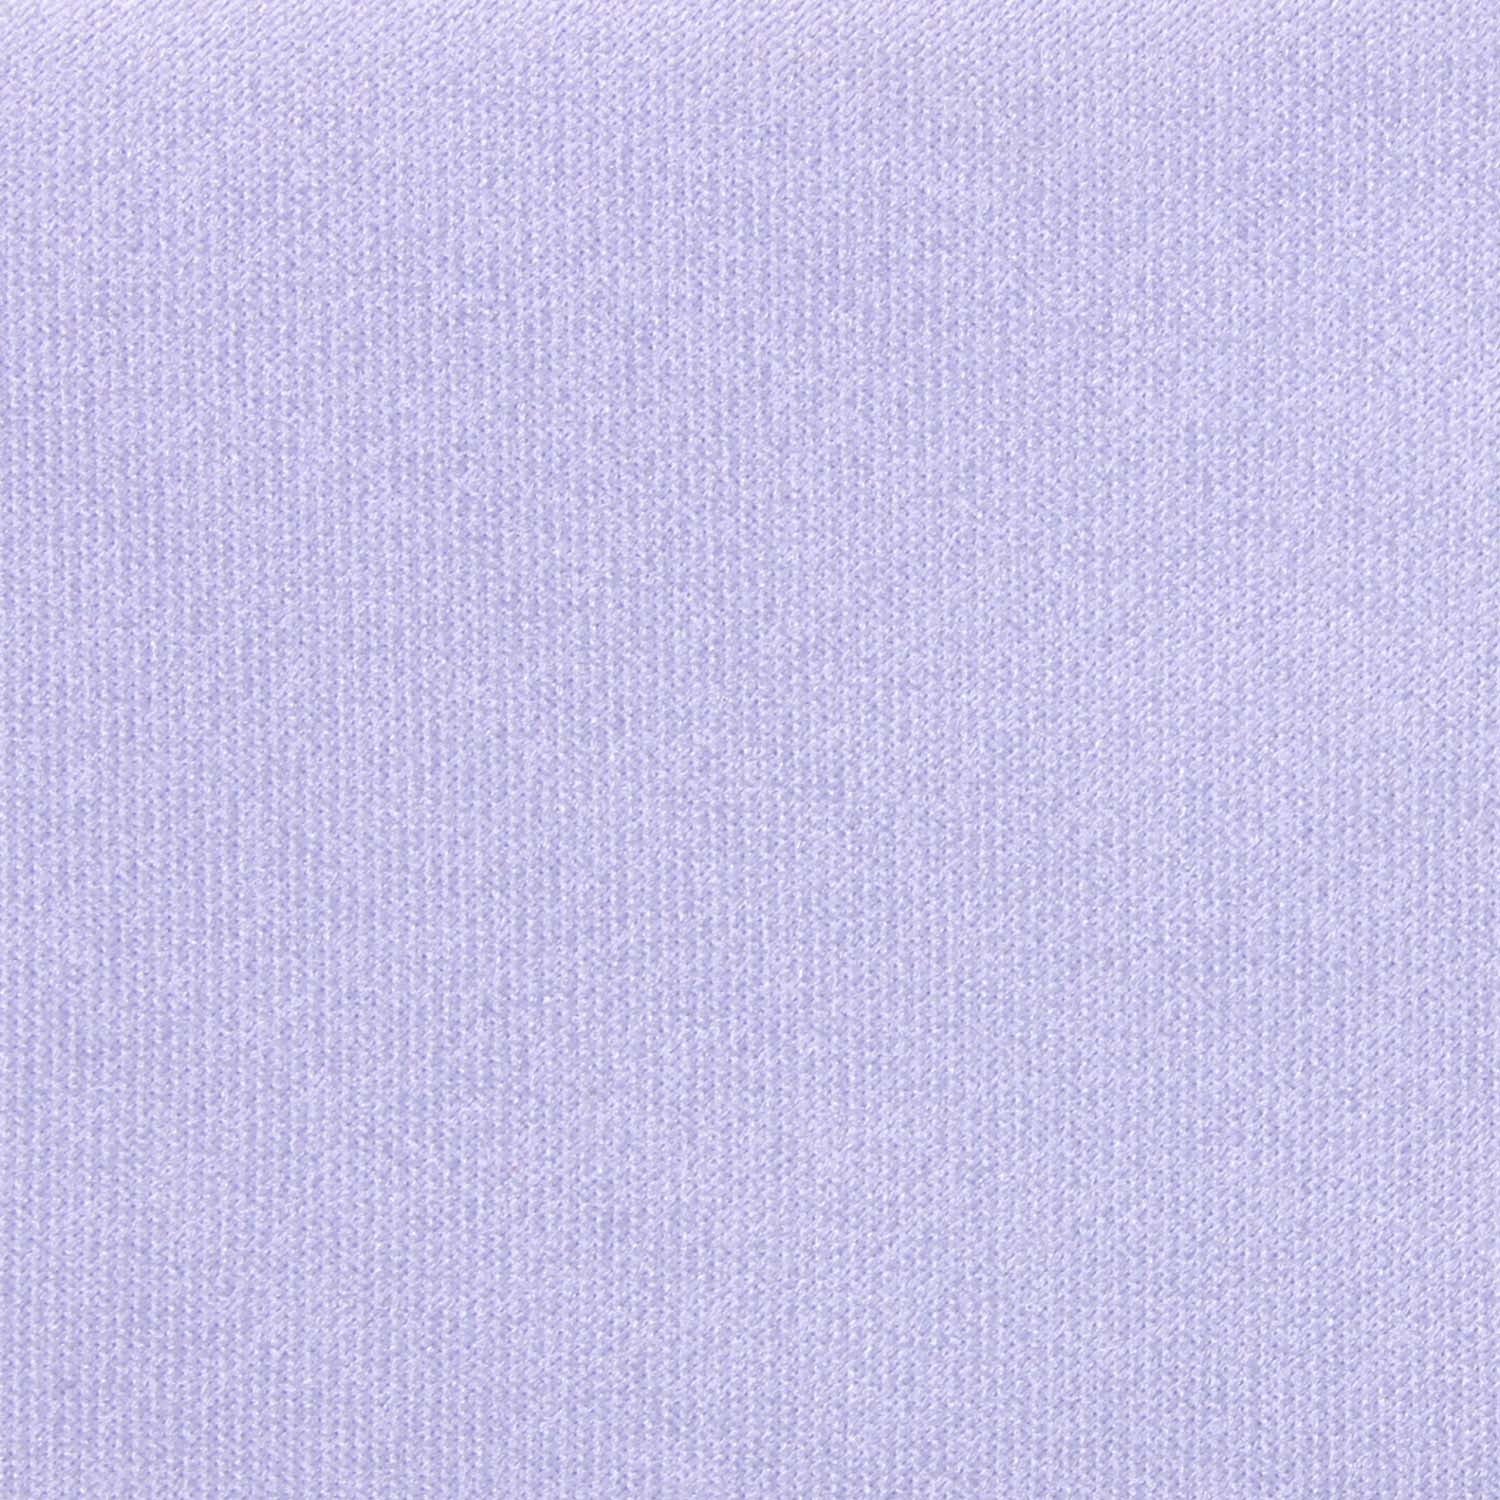 Lavender Purple Satin Fabric Pocket Square M147